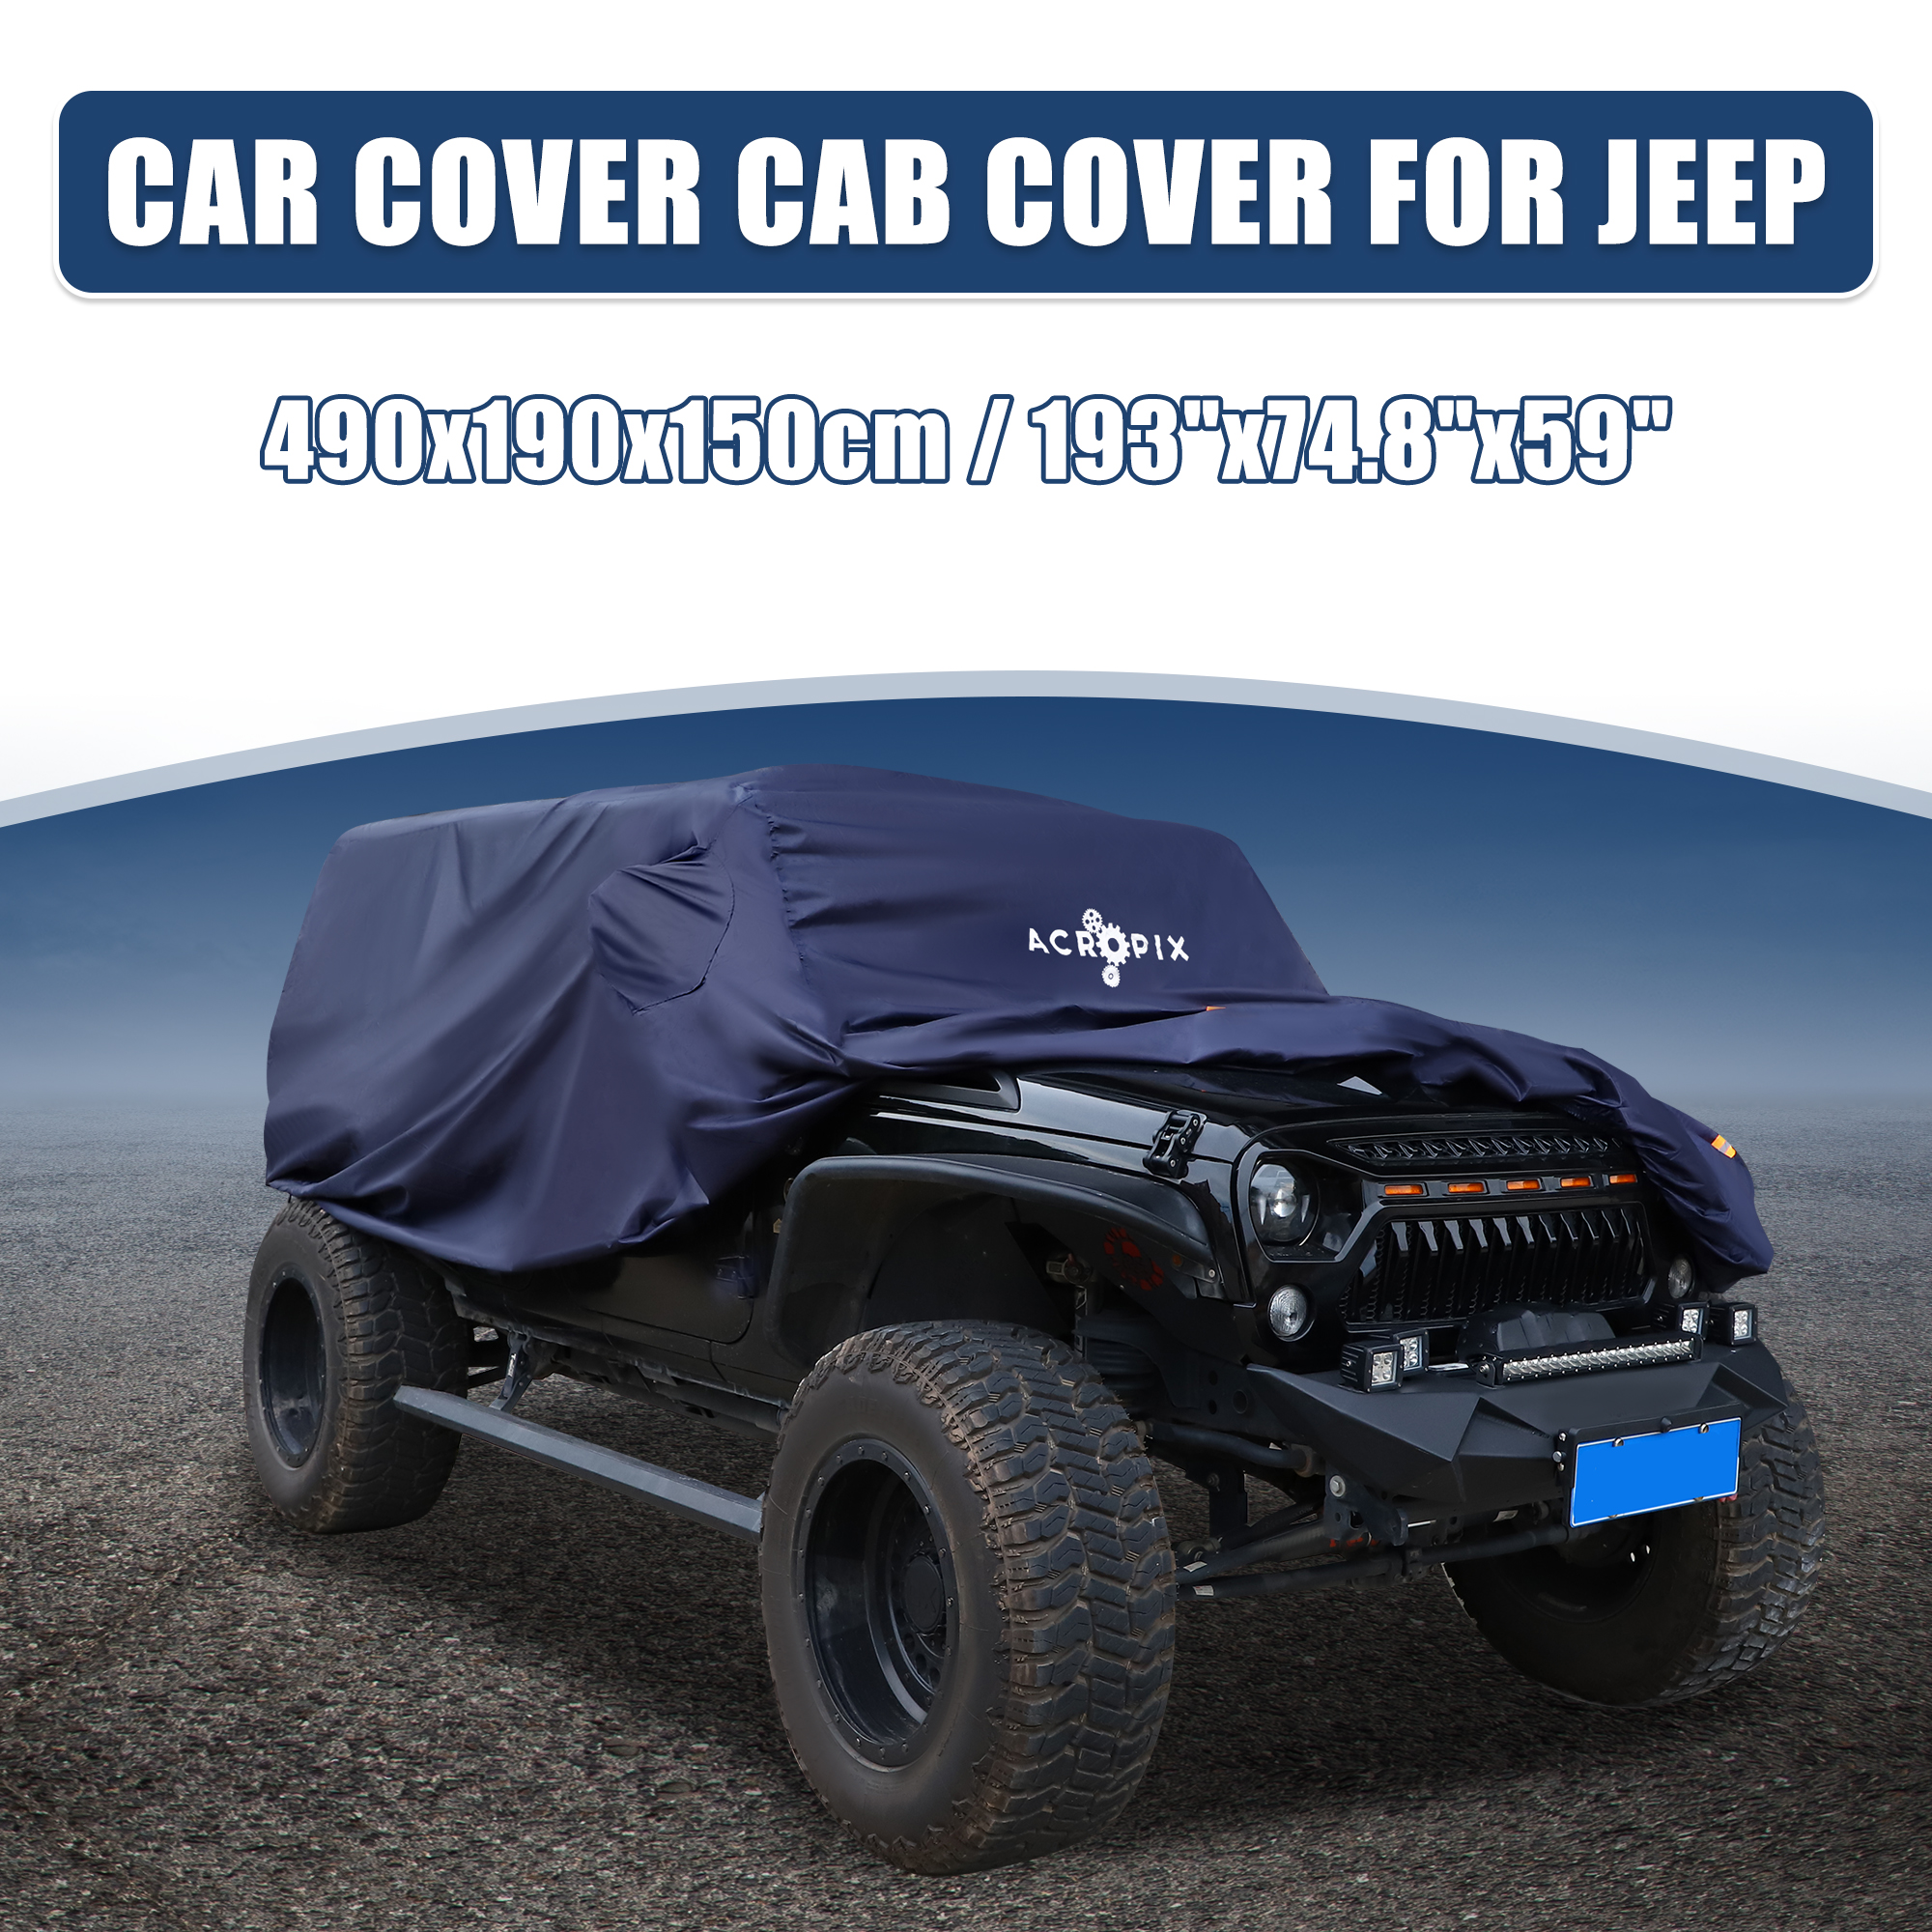 Unique Bargains SUV Car Cover Fit for Jeep Wrangler JK JL 4 Door 2007-2021 with Driver Door - Pack of 1 Navy Blue